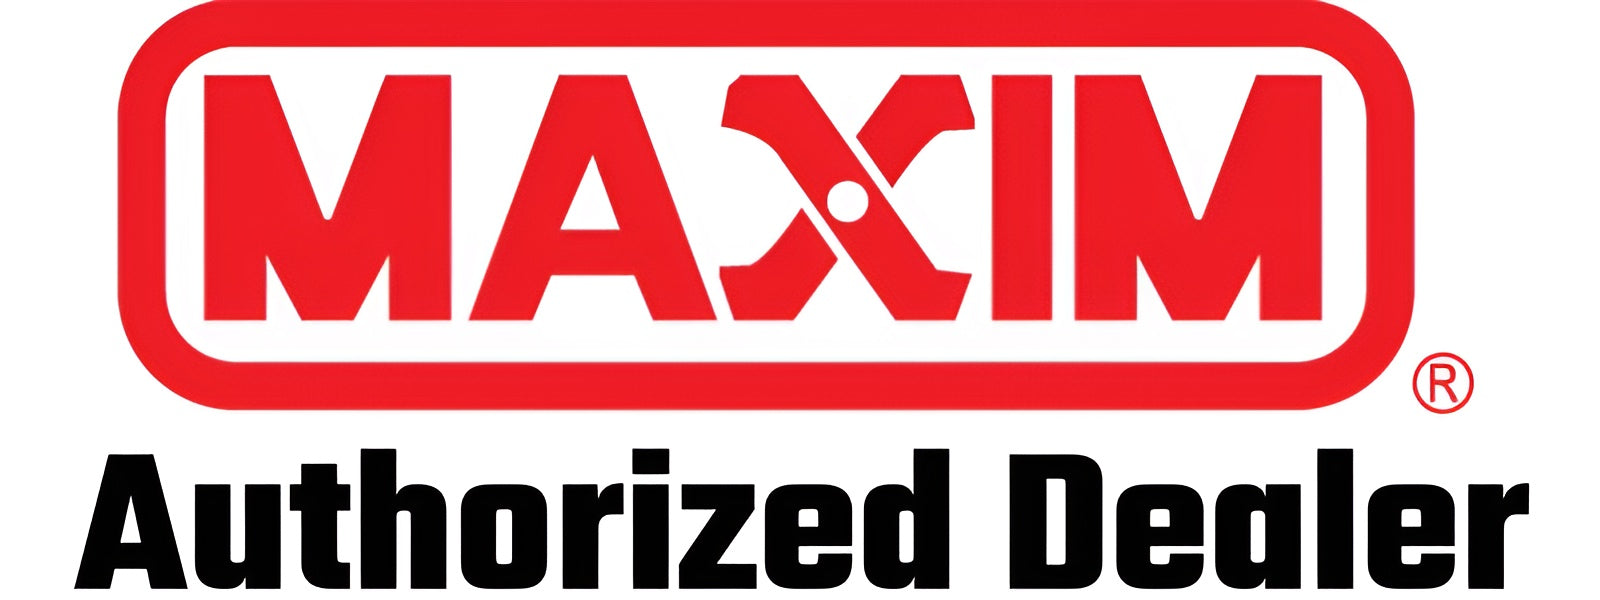 Maxim Authorized Dealer Badge